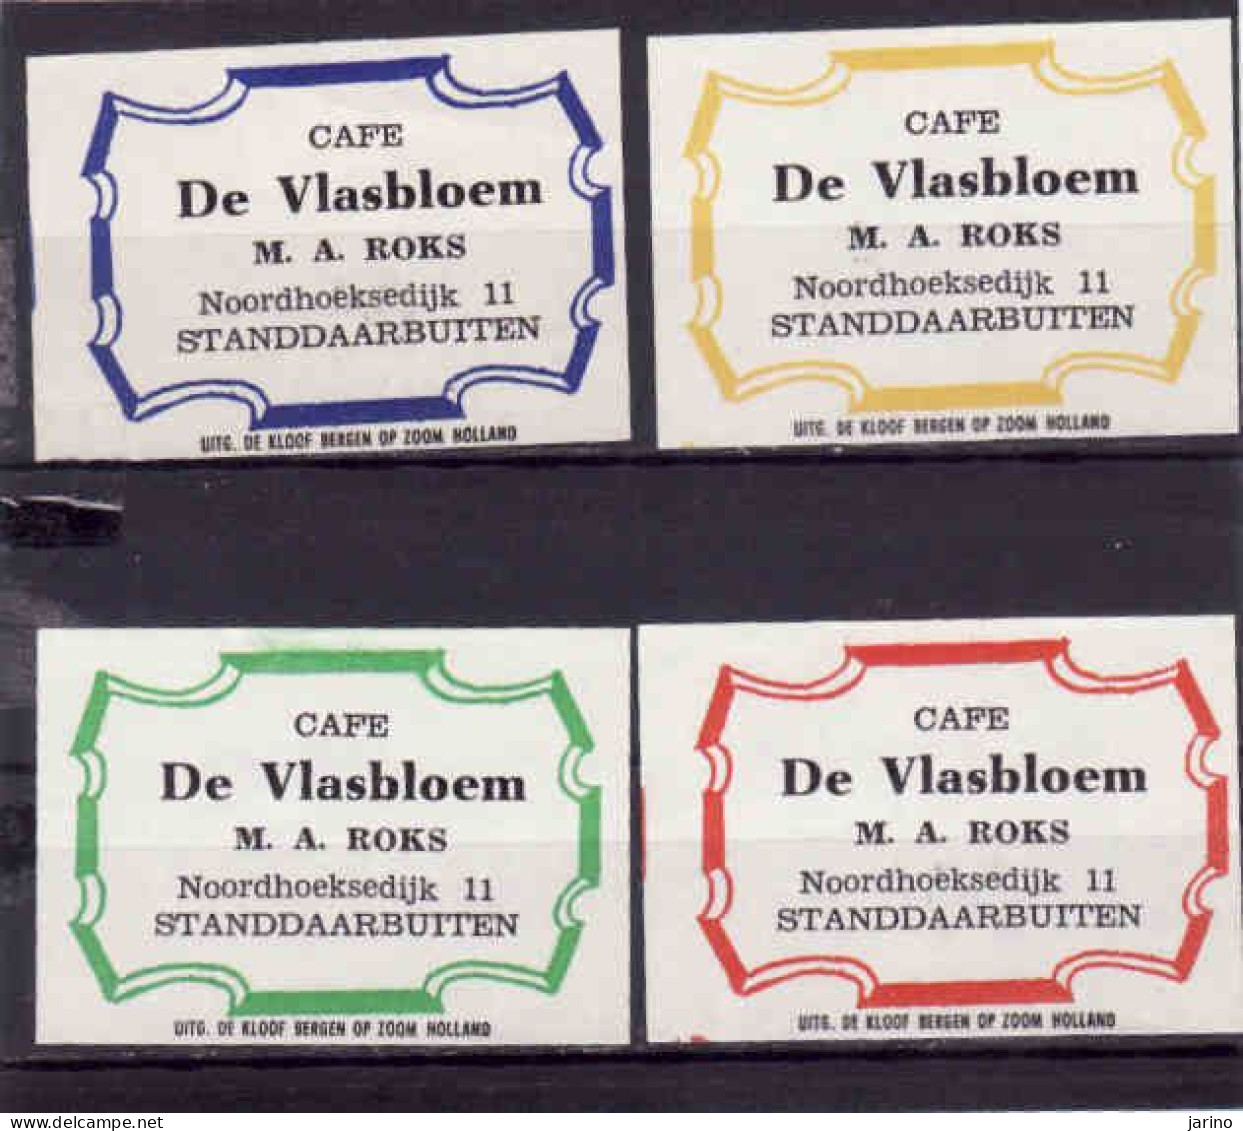 4 Dutch Matchbox Labels, Standdaarbutten - North Brabant, Cafe De Vlasbloem, M. A. Roks, Holland, Netherlands - Matchbox Labels